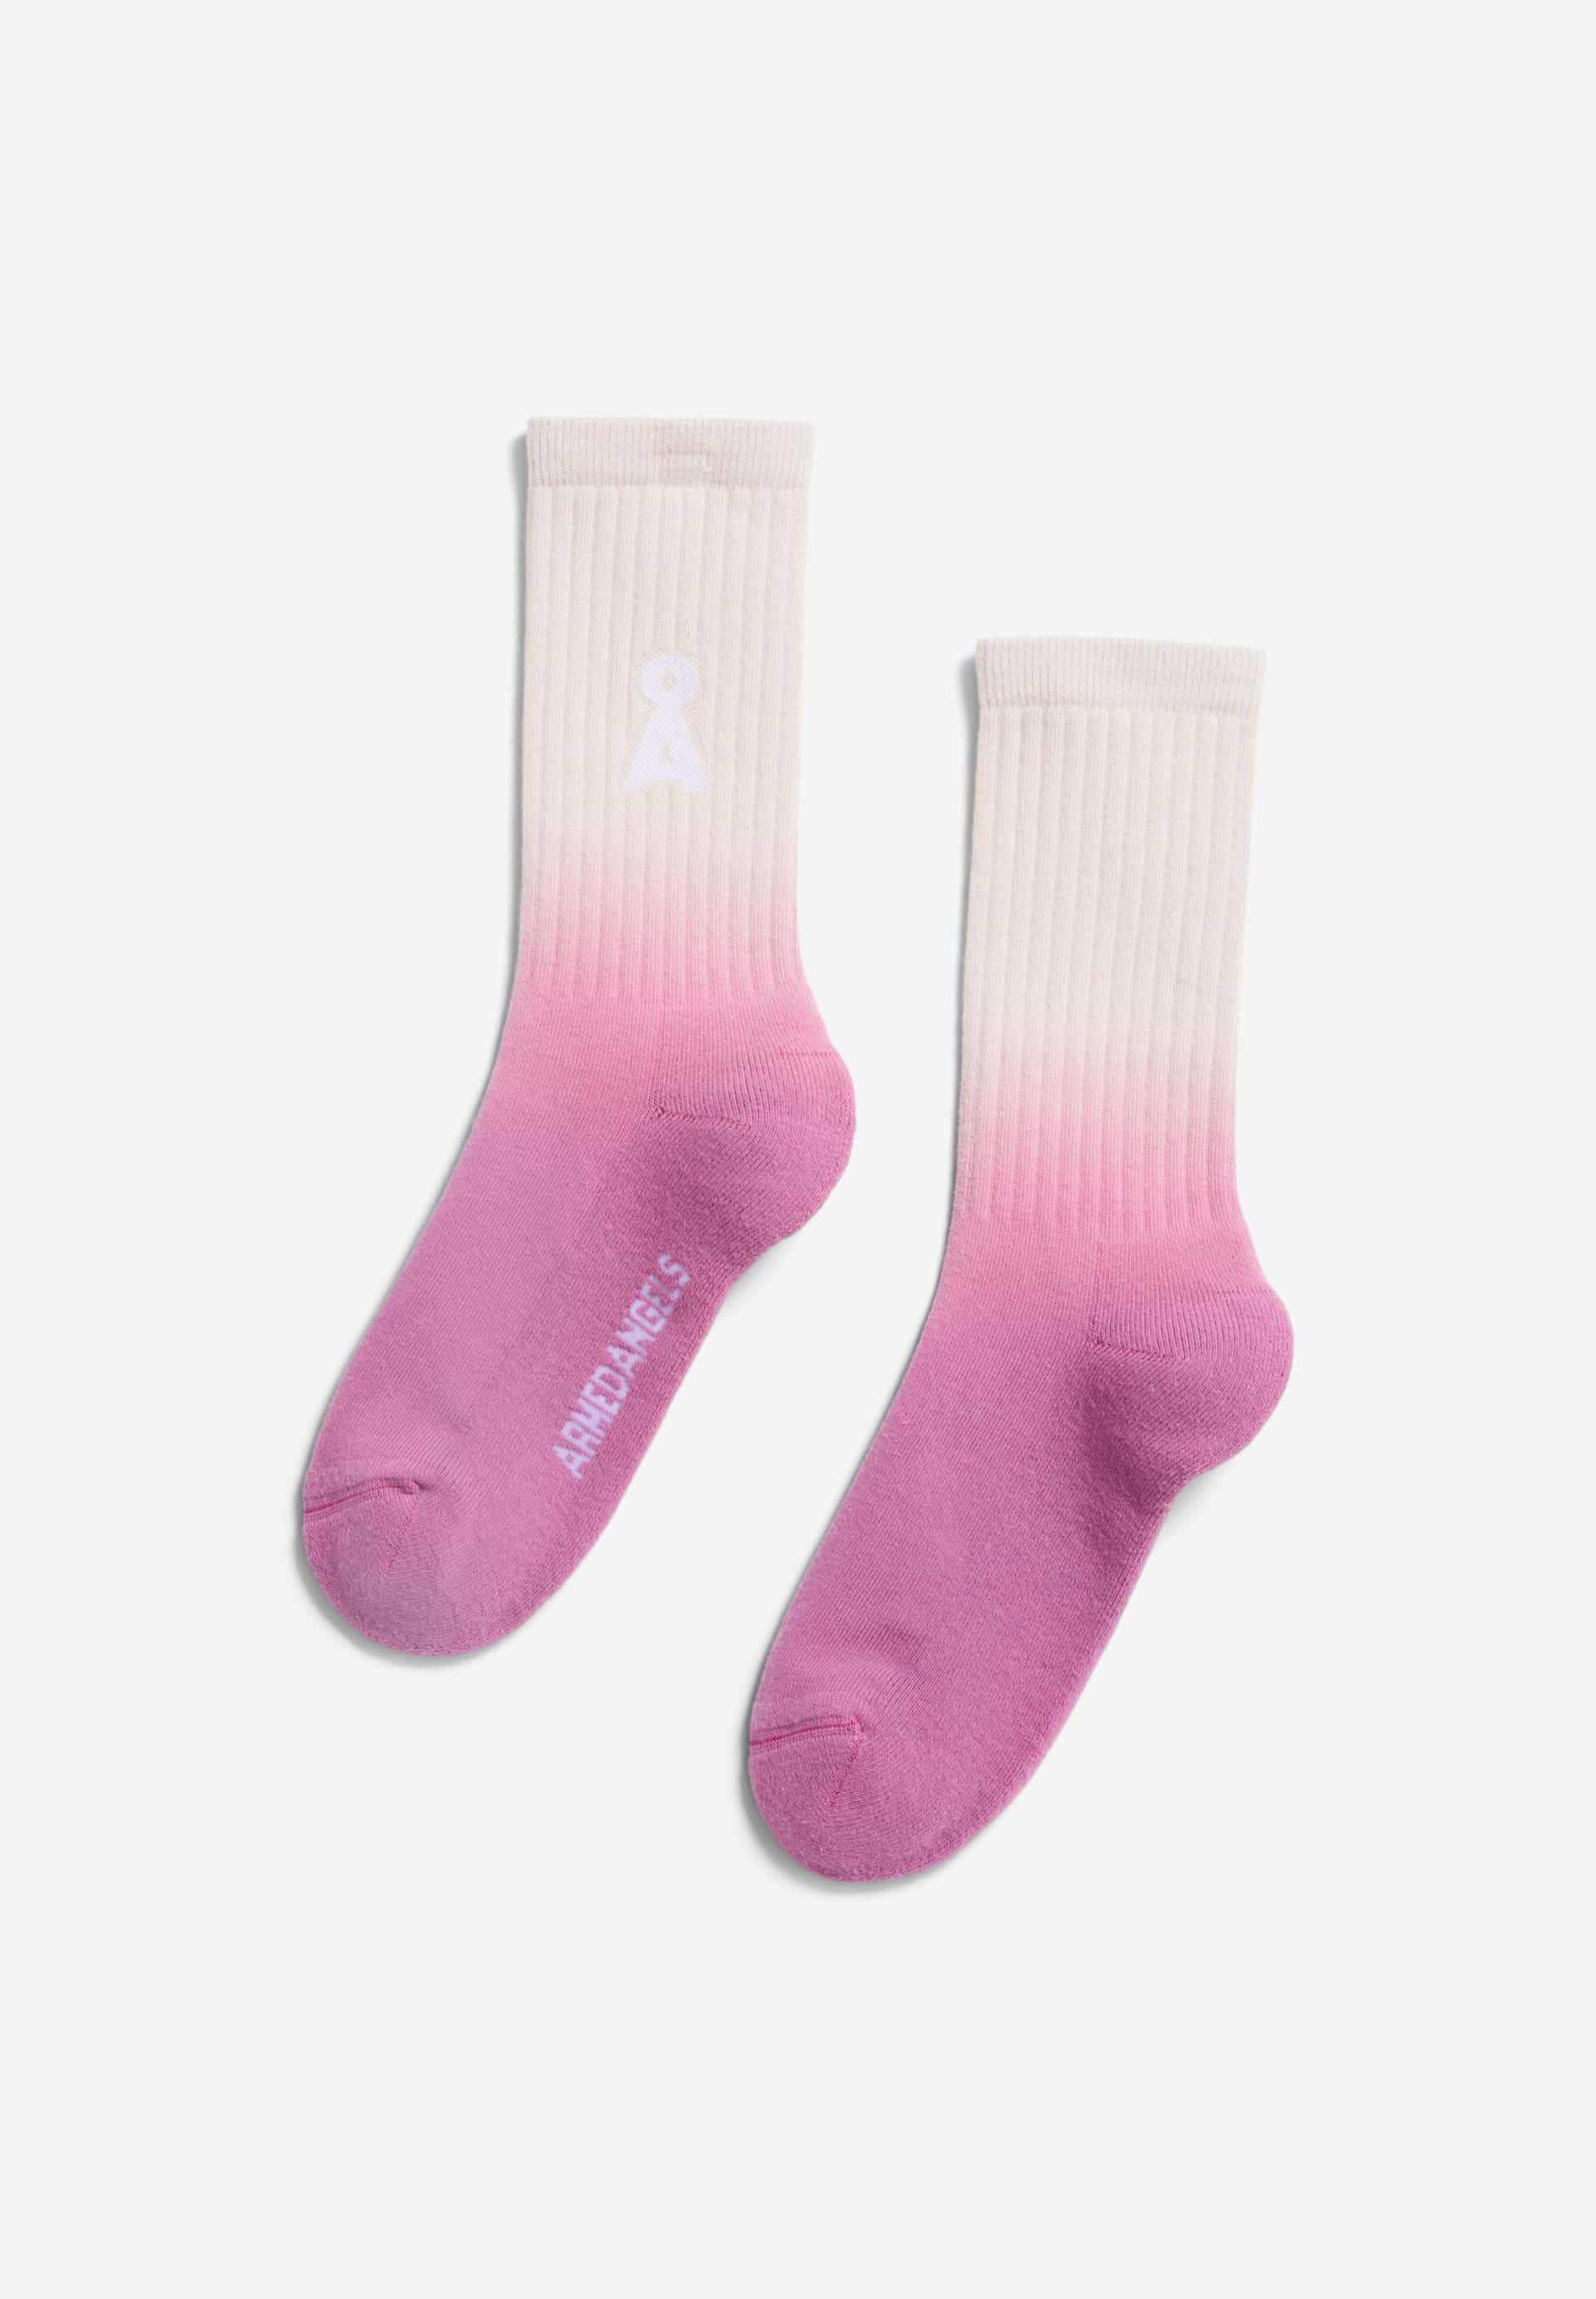 SAAMUS DEGRADÉ Socks made of Organic Cotton Mix